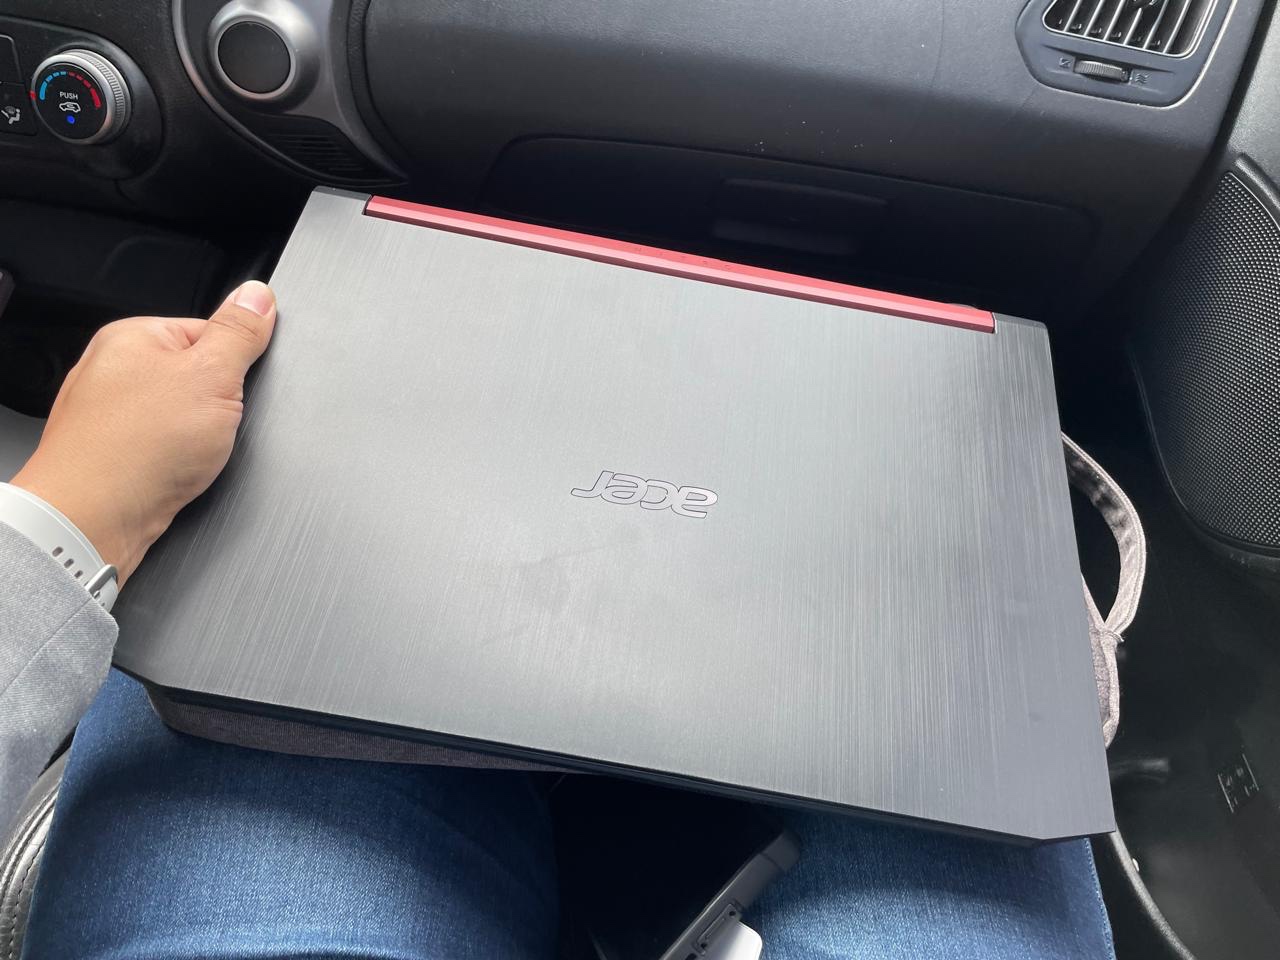 computadoras y laptops - Laptop Acer Nitro 5 I5 N18C3 0